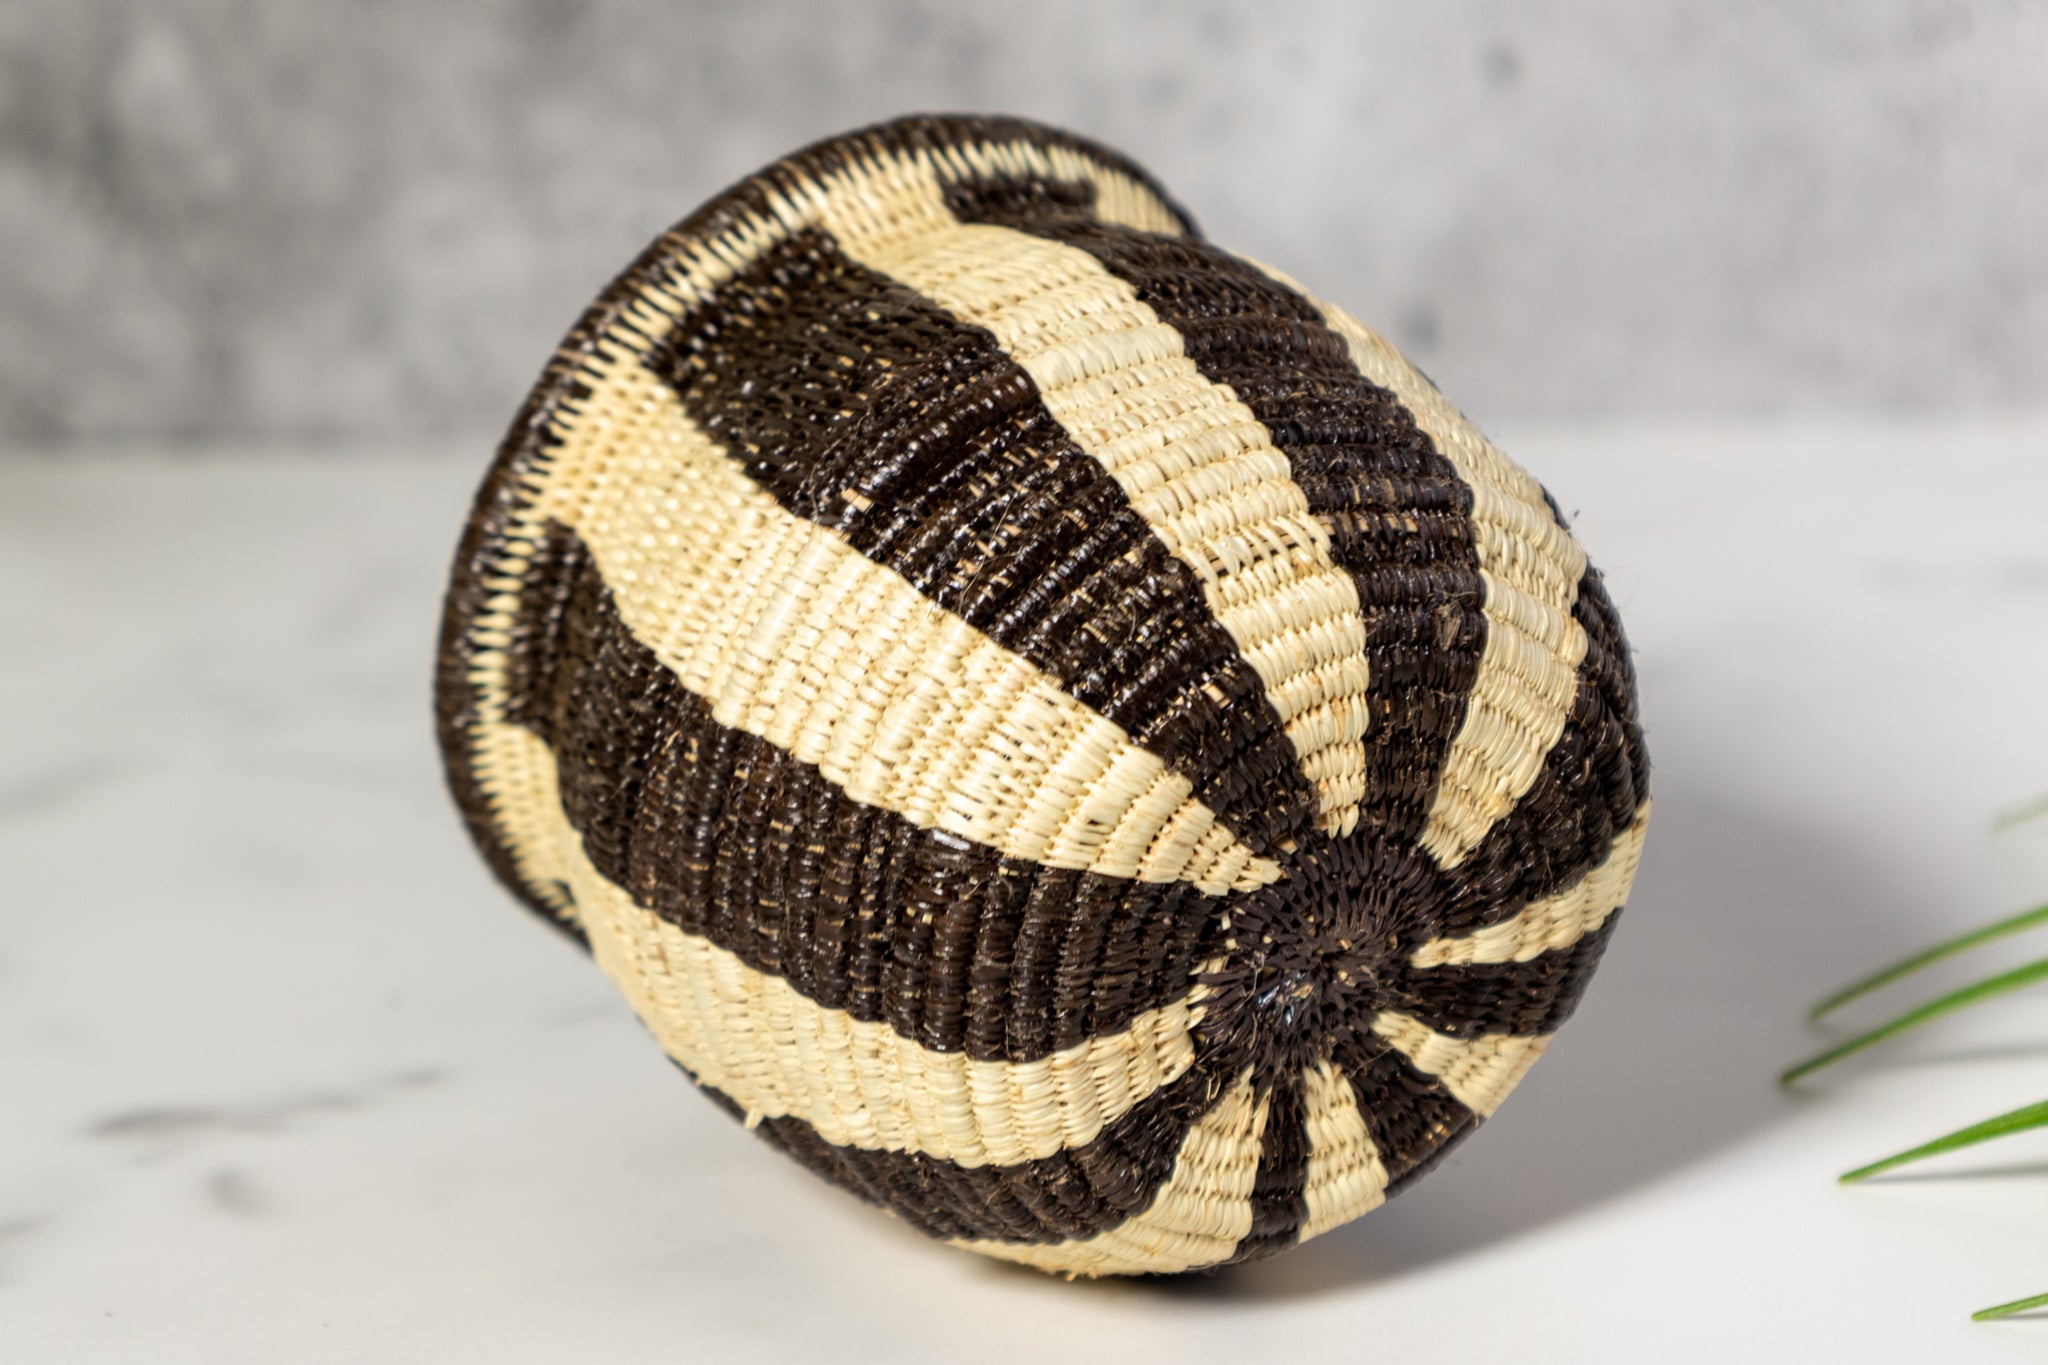 Small Black And White Stripe Rainforest Basket